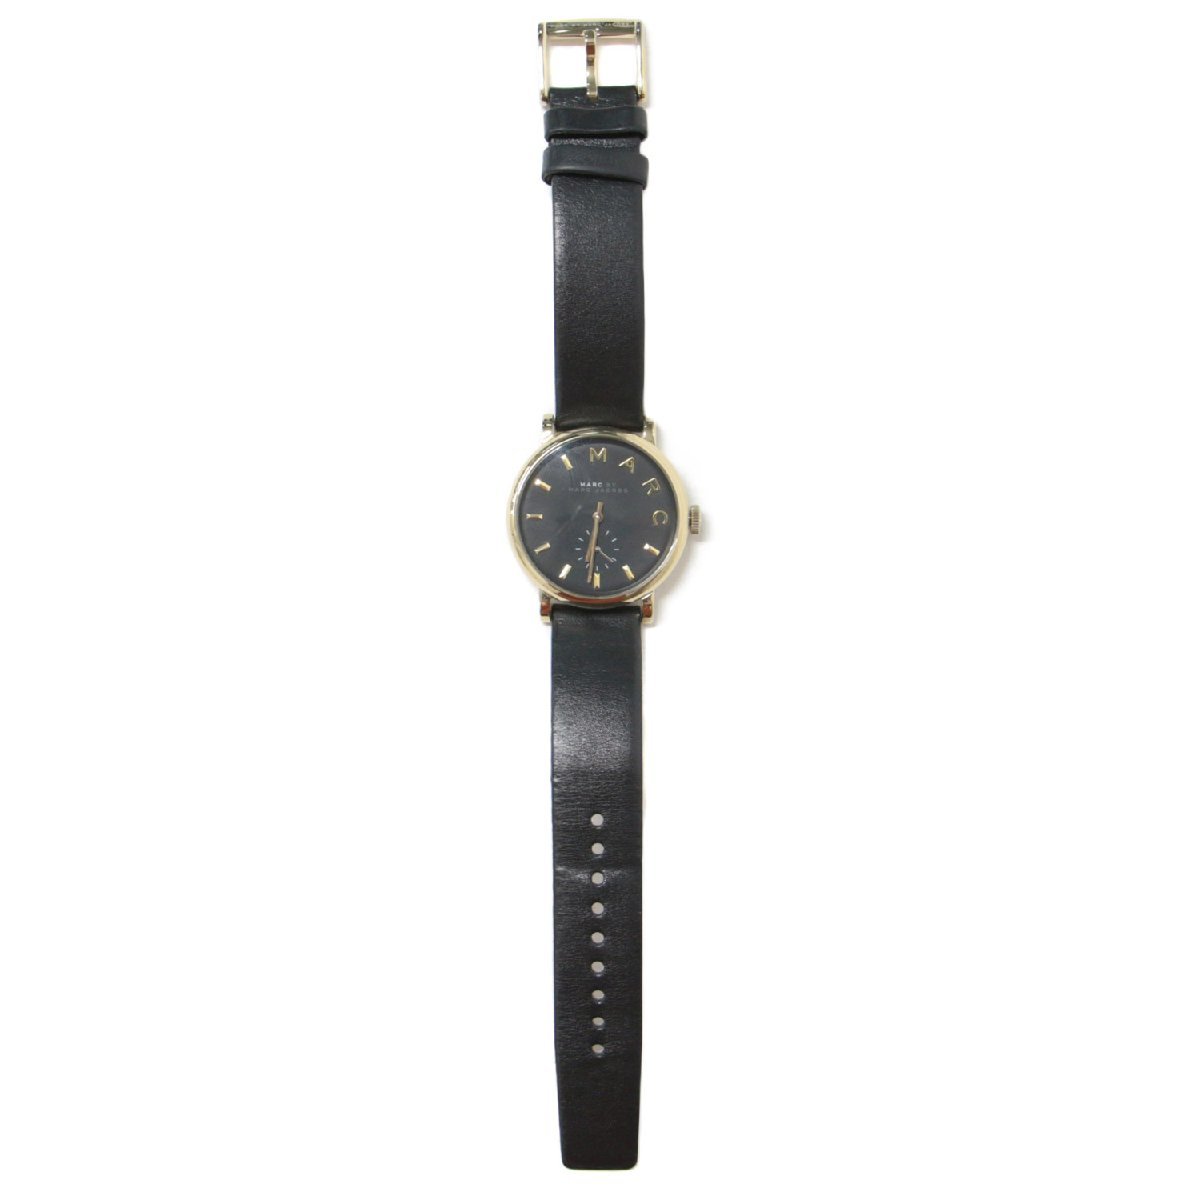 MARC BY MARC JACOBS マークバイマークジェイコブス 時計 腕時計 ブラック 黒 クオーツ ロゴ MBM1269 アナログ フォーマル ブランド